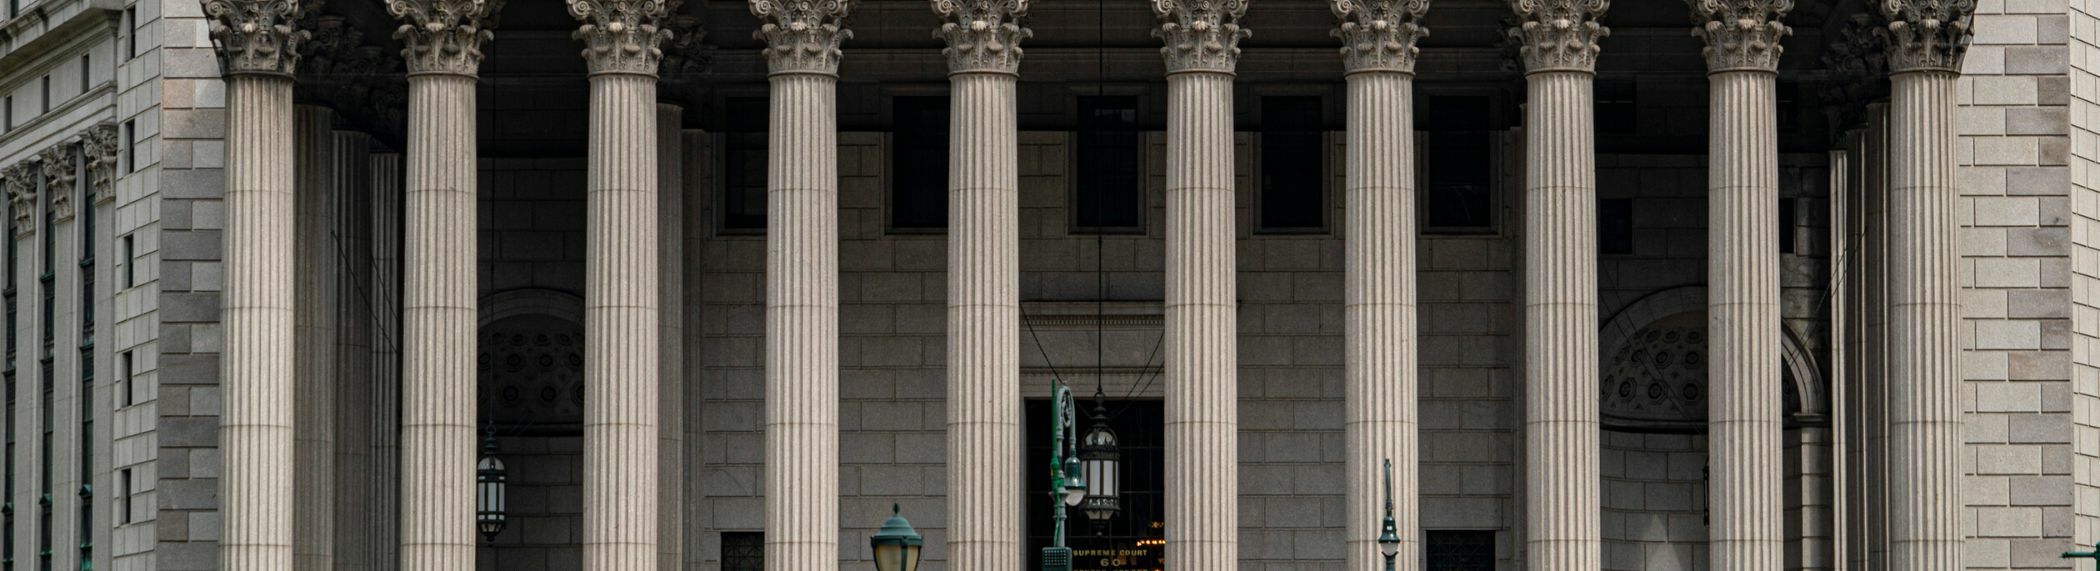 Columns on a court house